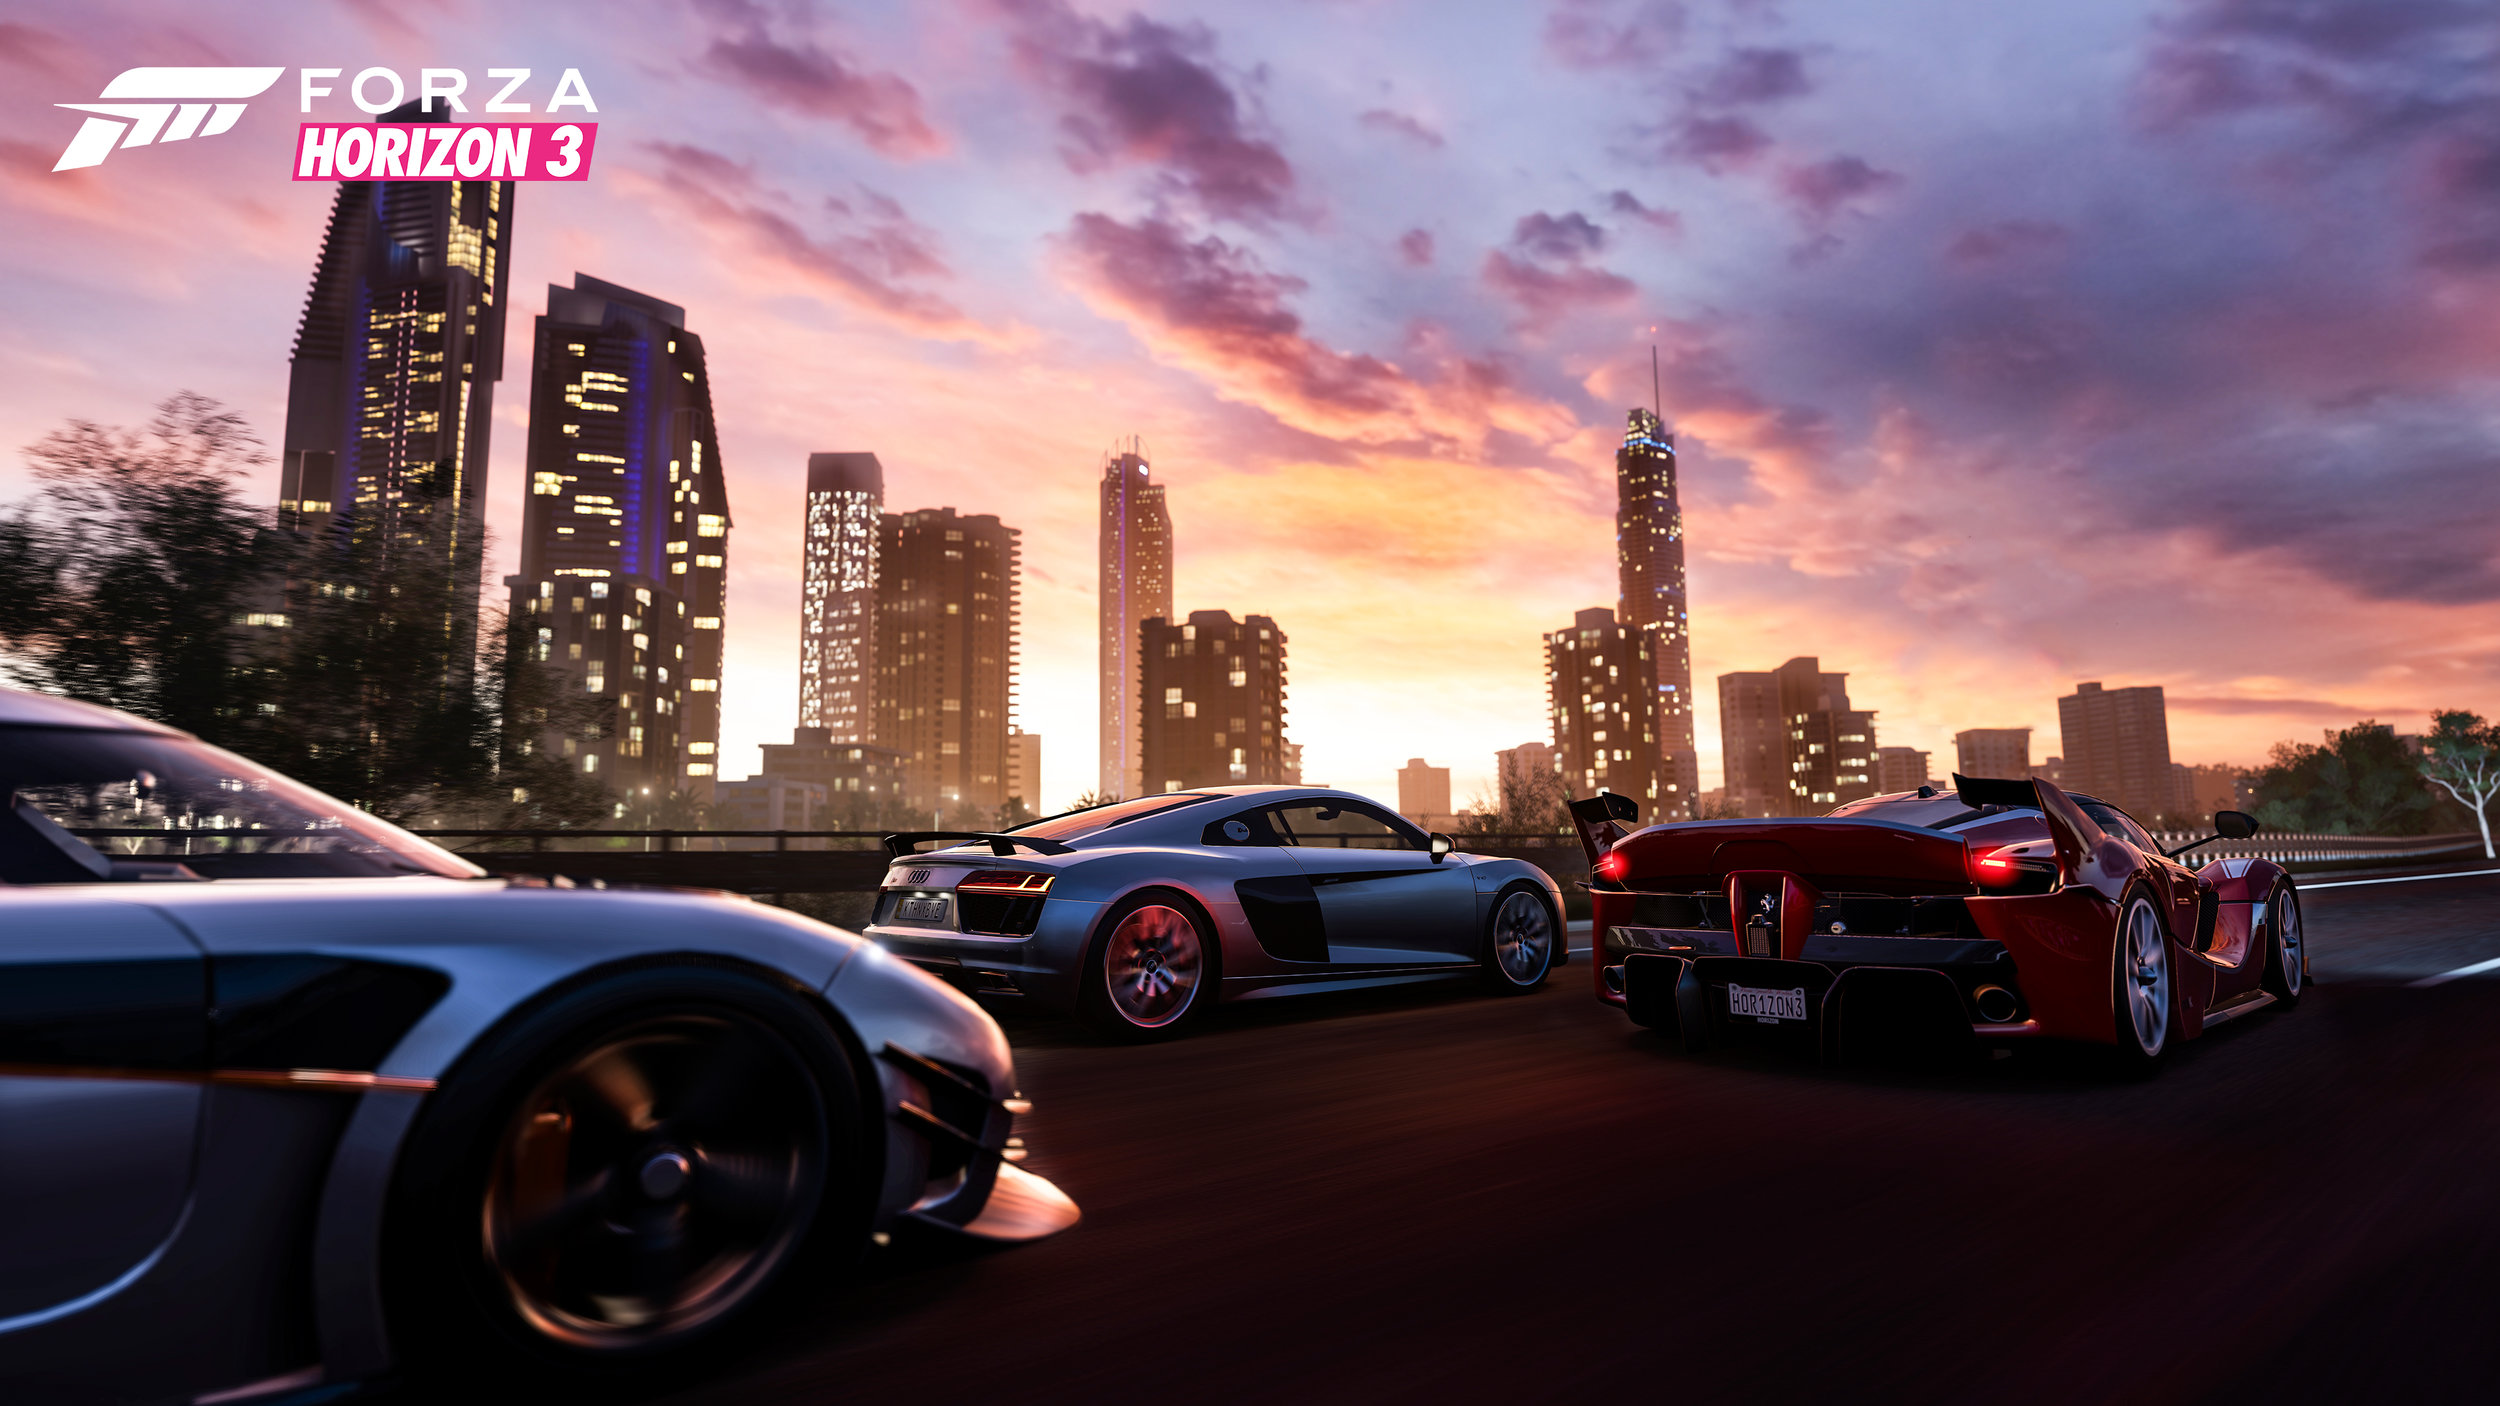 Forza Motorsport 6, Forza Horizon 3 Coming To Windows 10 - Rumor